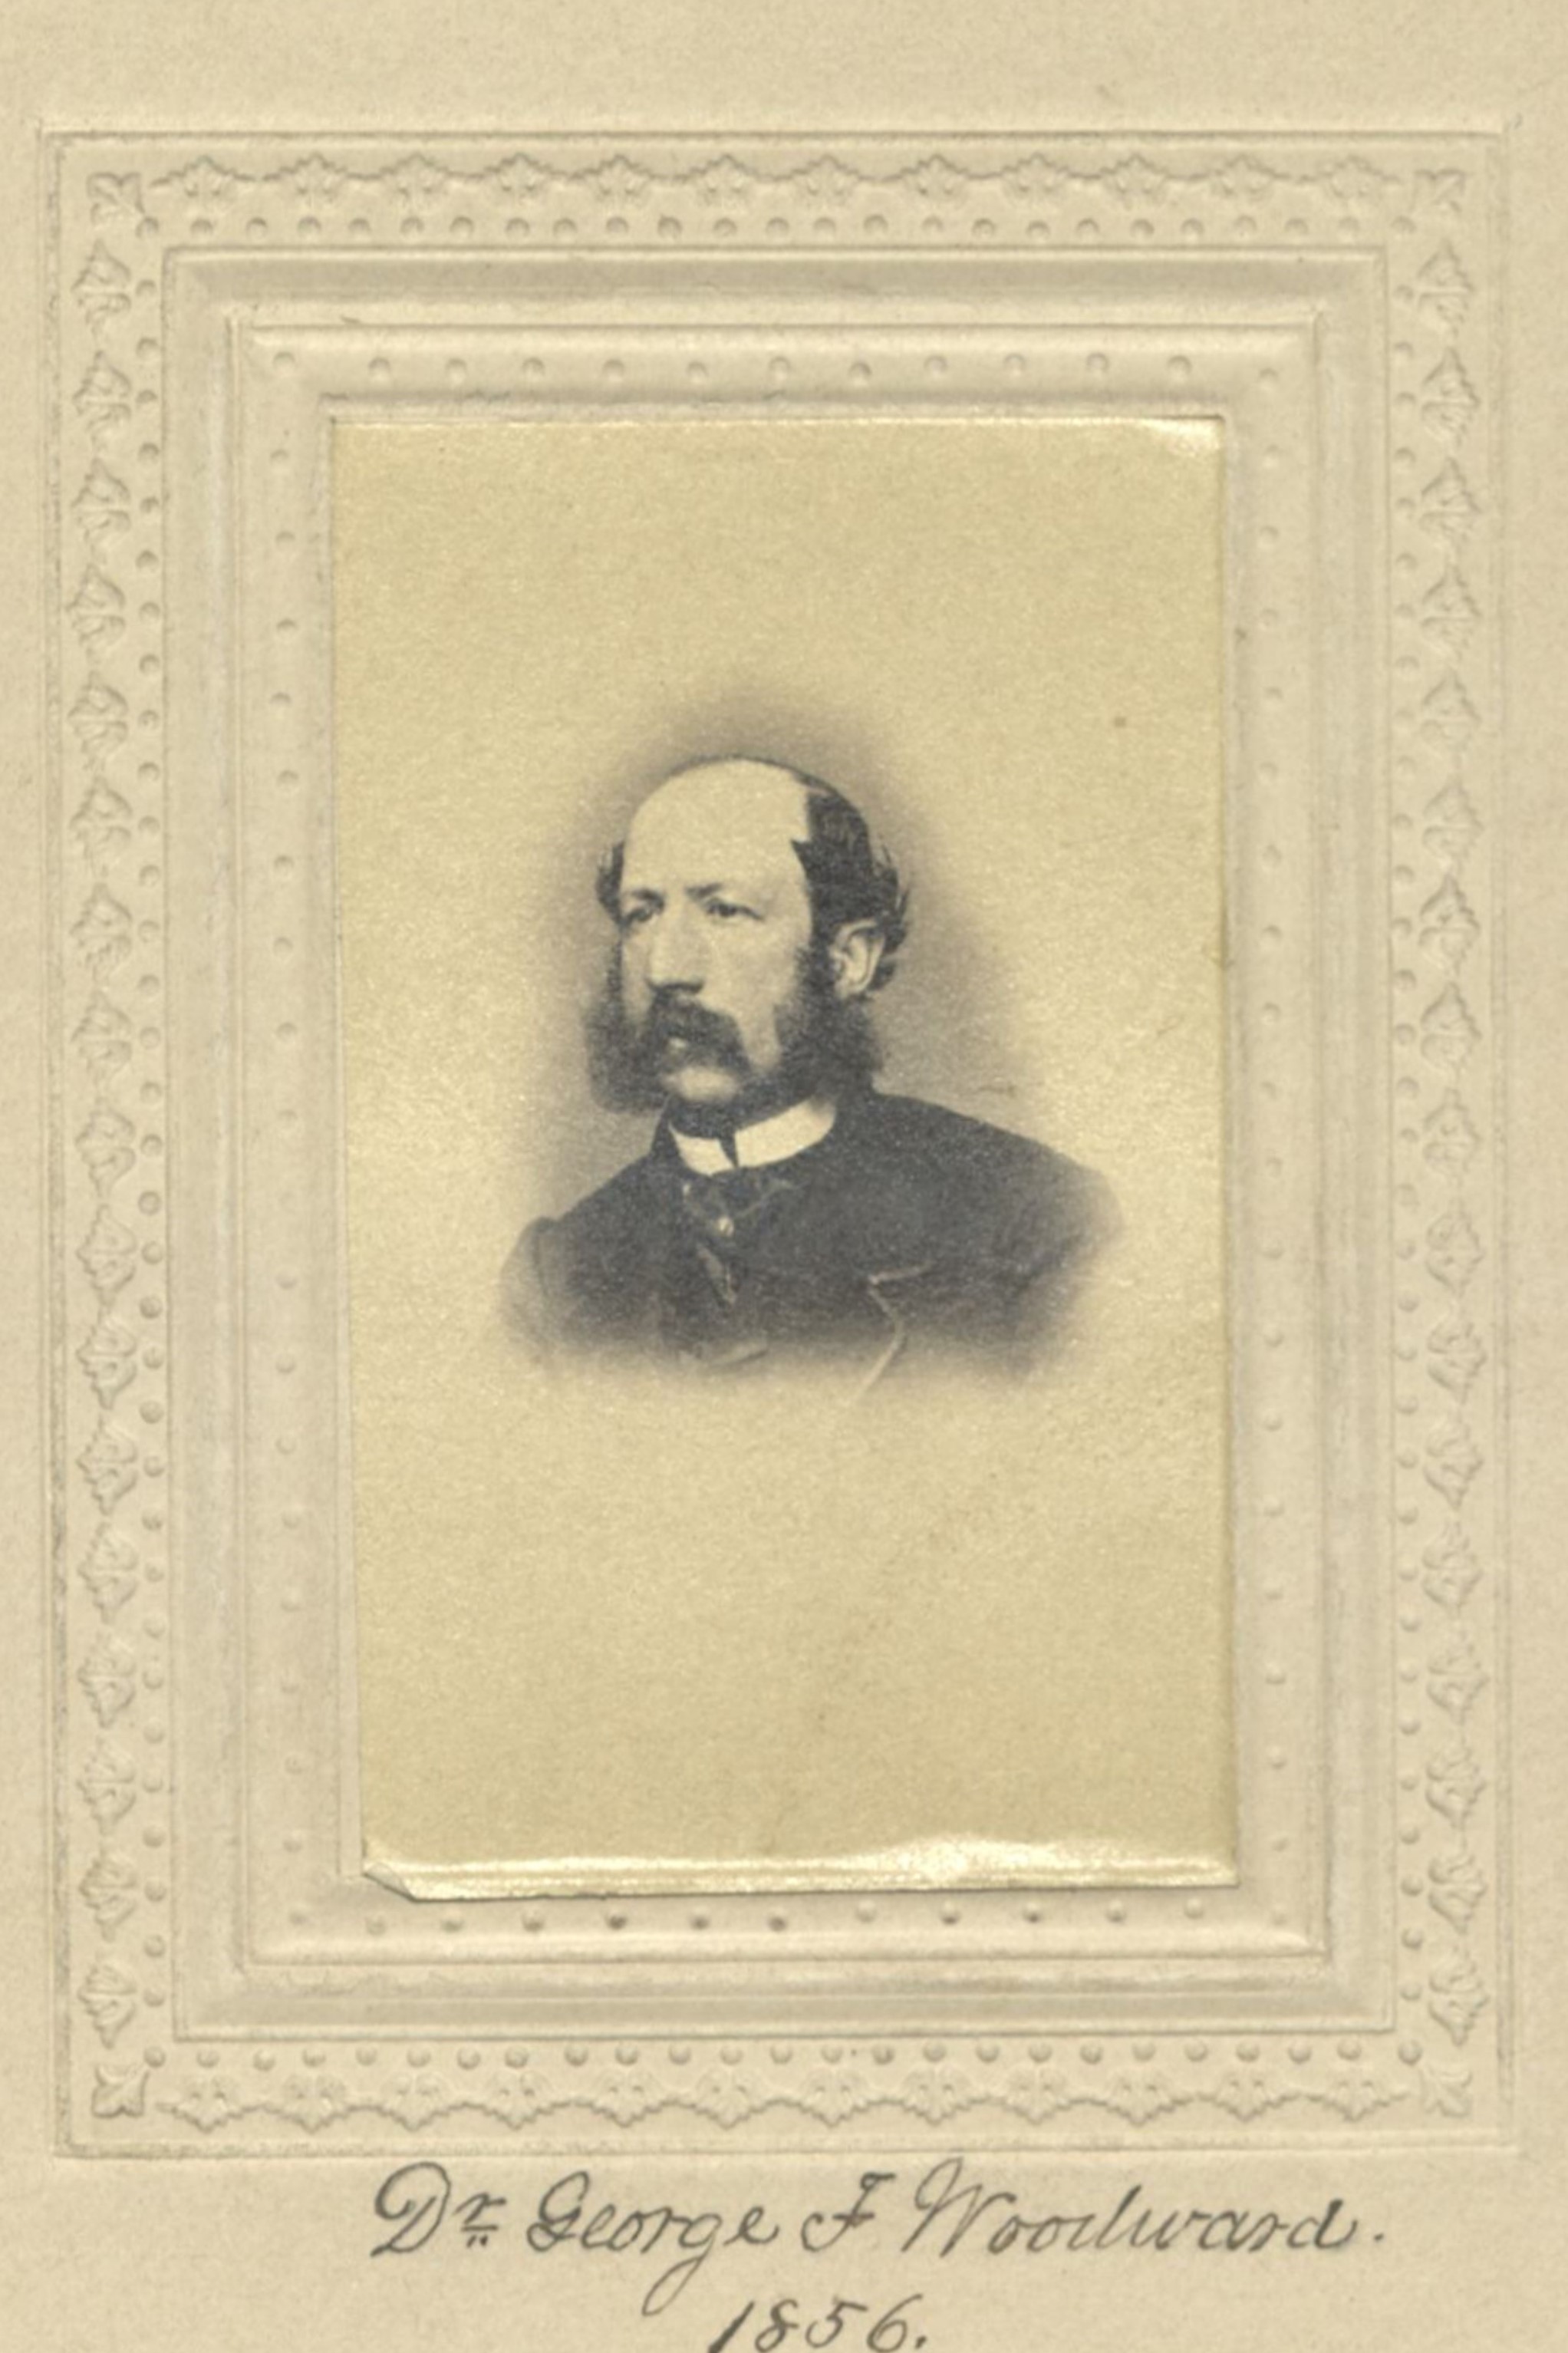 Member portrait of George F. Woodward